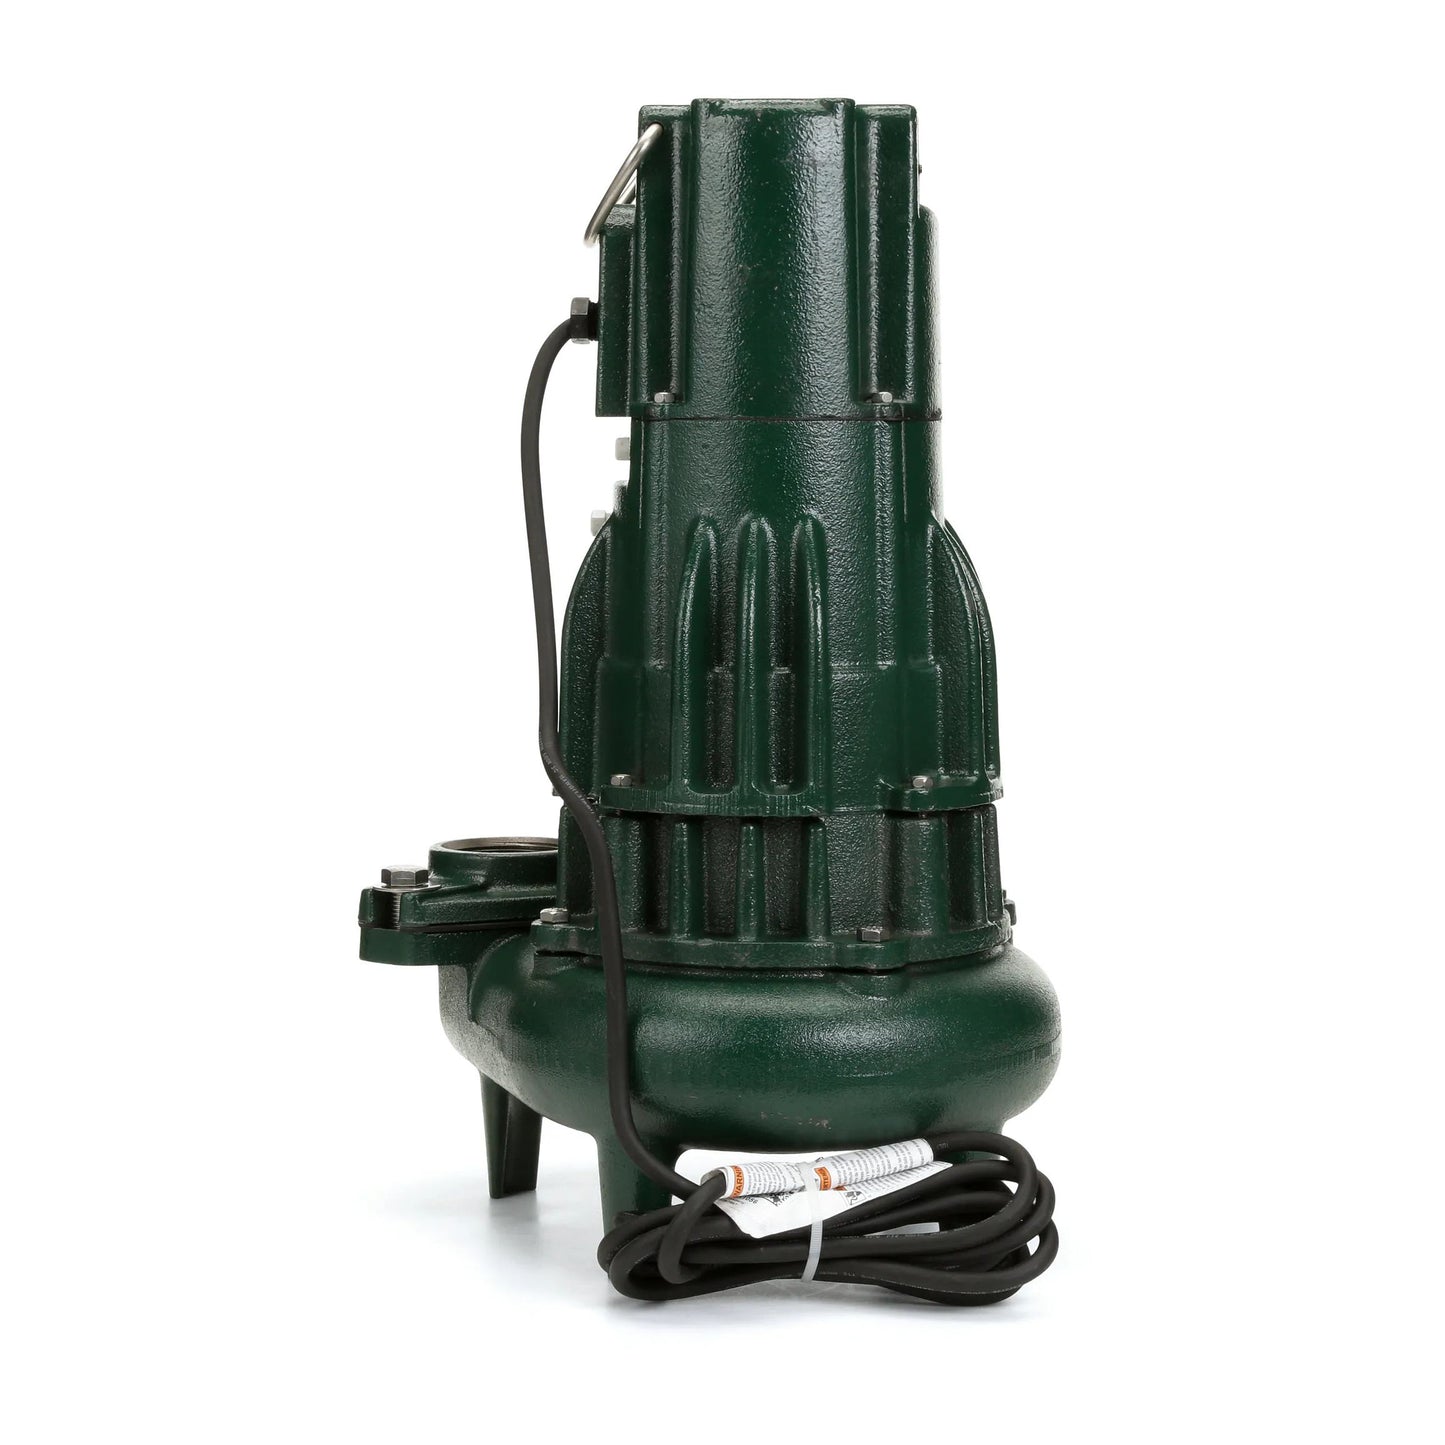 282-0004 - E282 Series Non-Automatic Cast Iron Sewage Pump, 230V, 1/2 HP